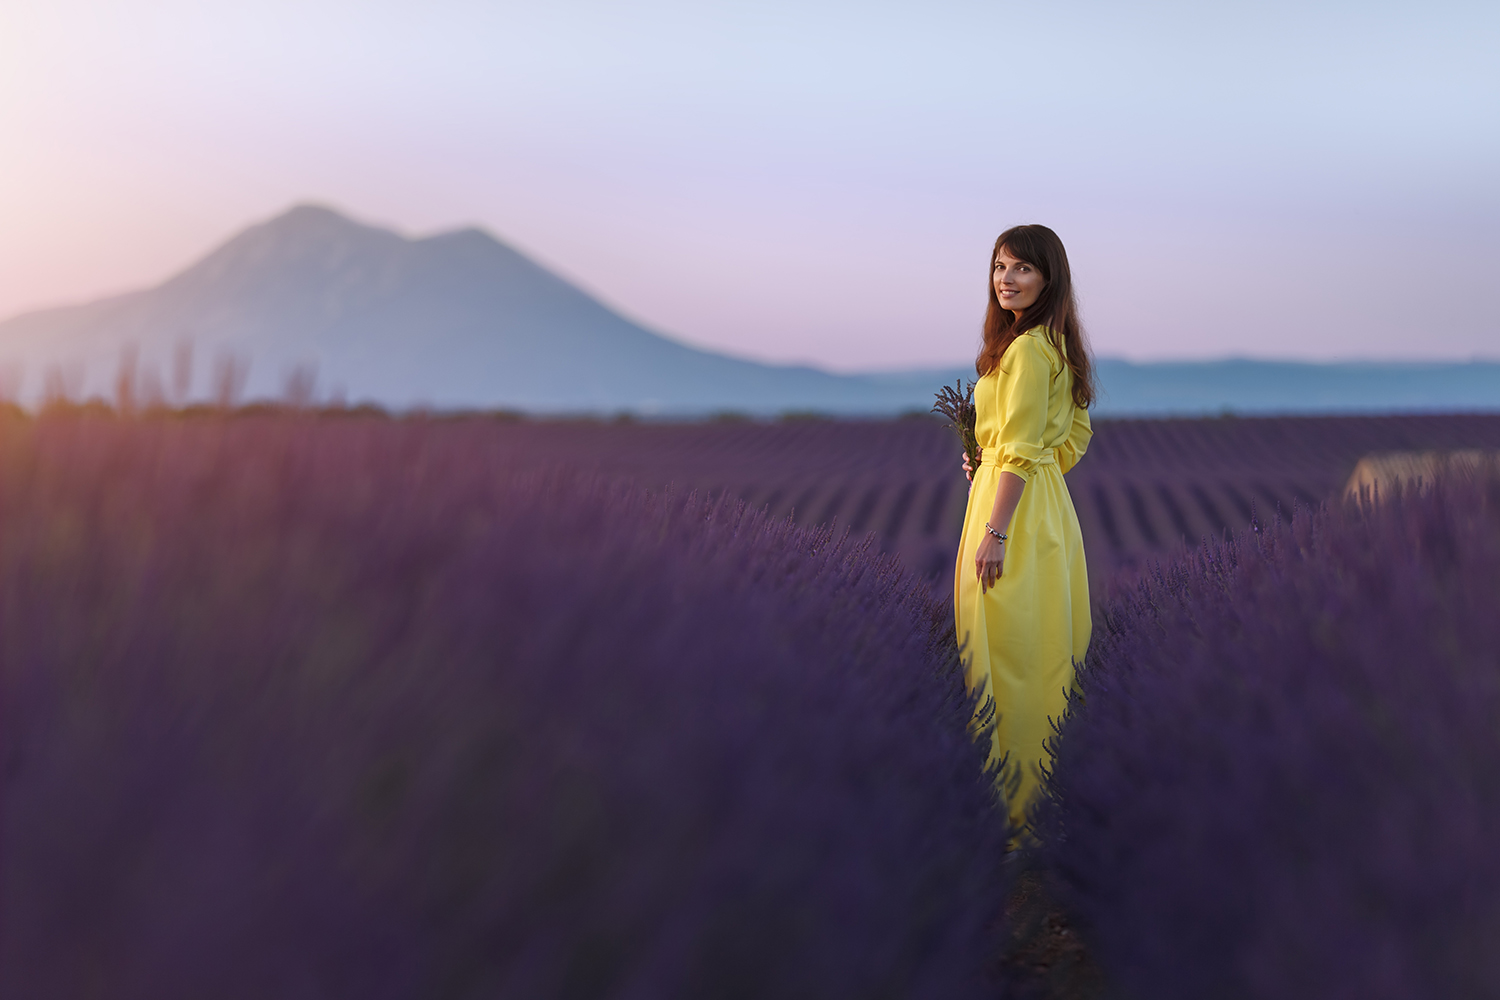 My lavender sunrise...